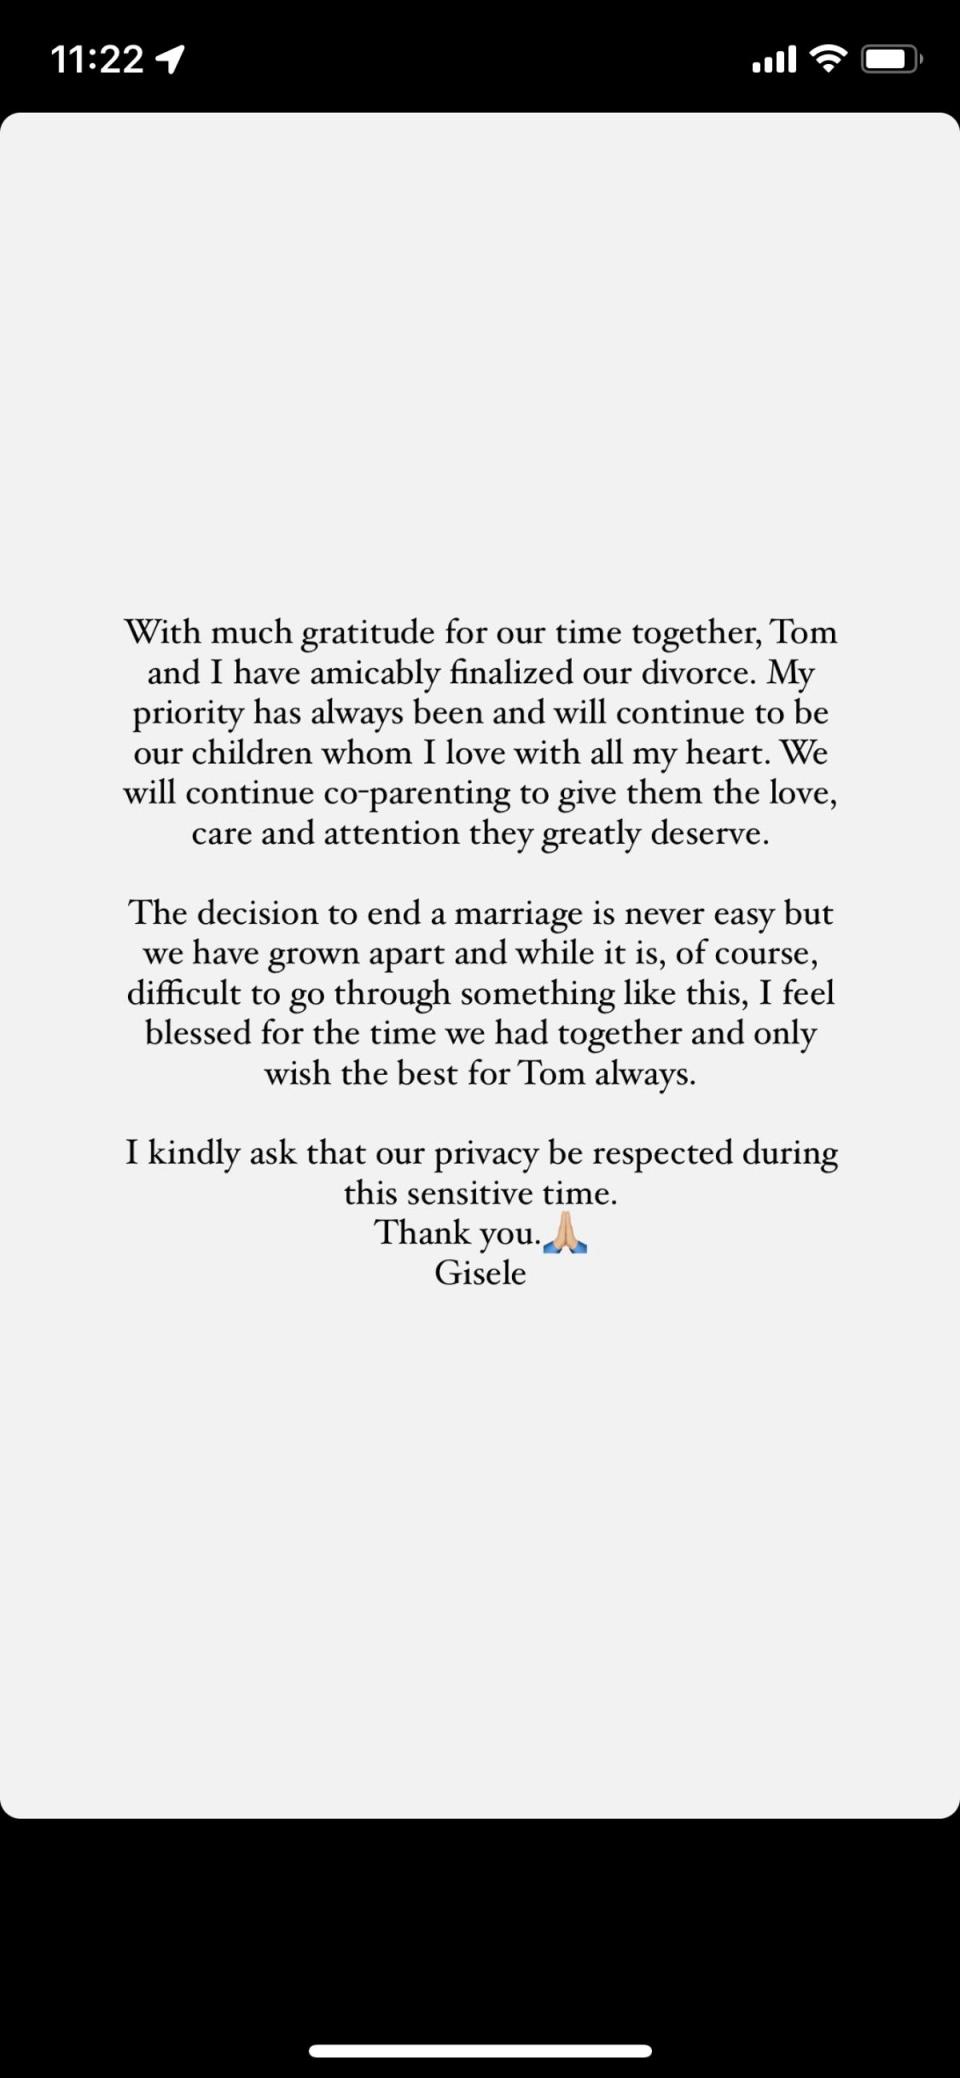 Gisele Bündchen shares news of divorce from Tom Brady on Instagram (Instagram)